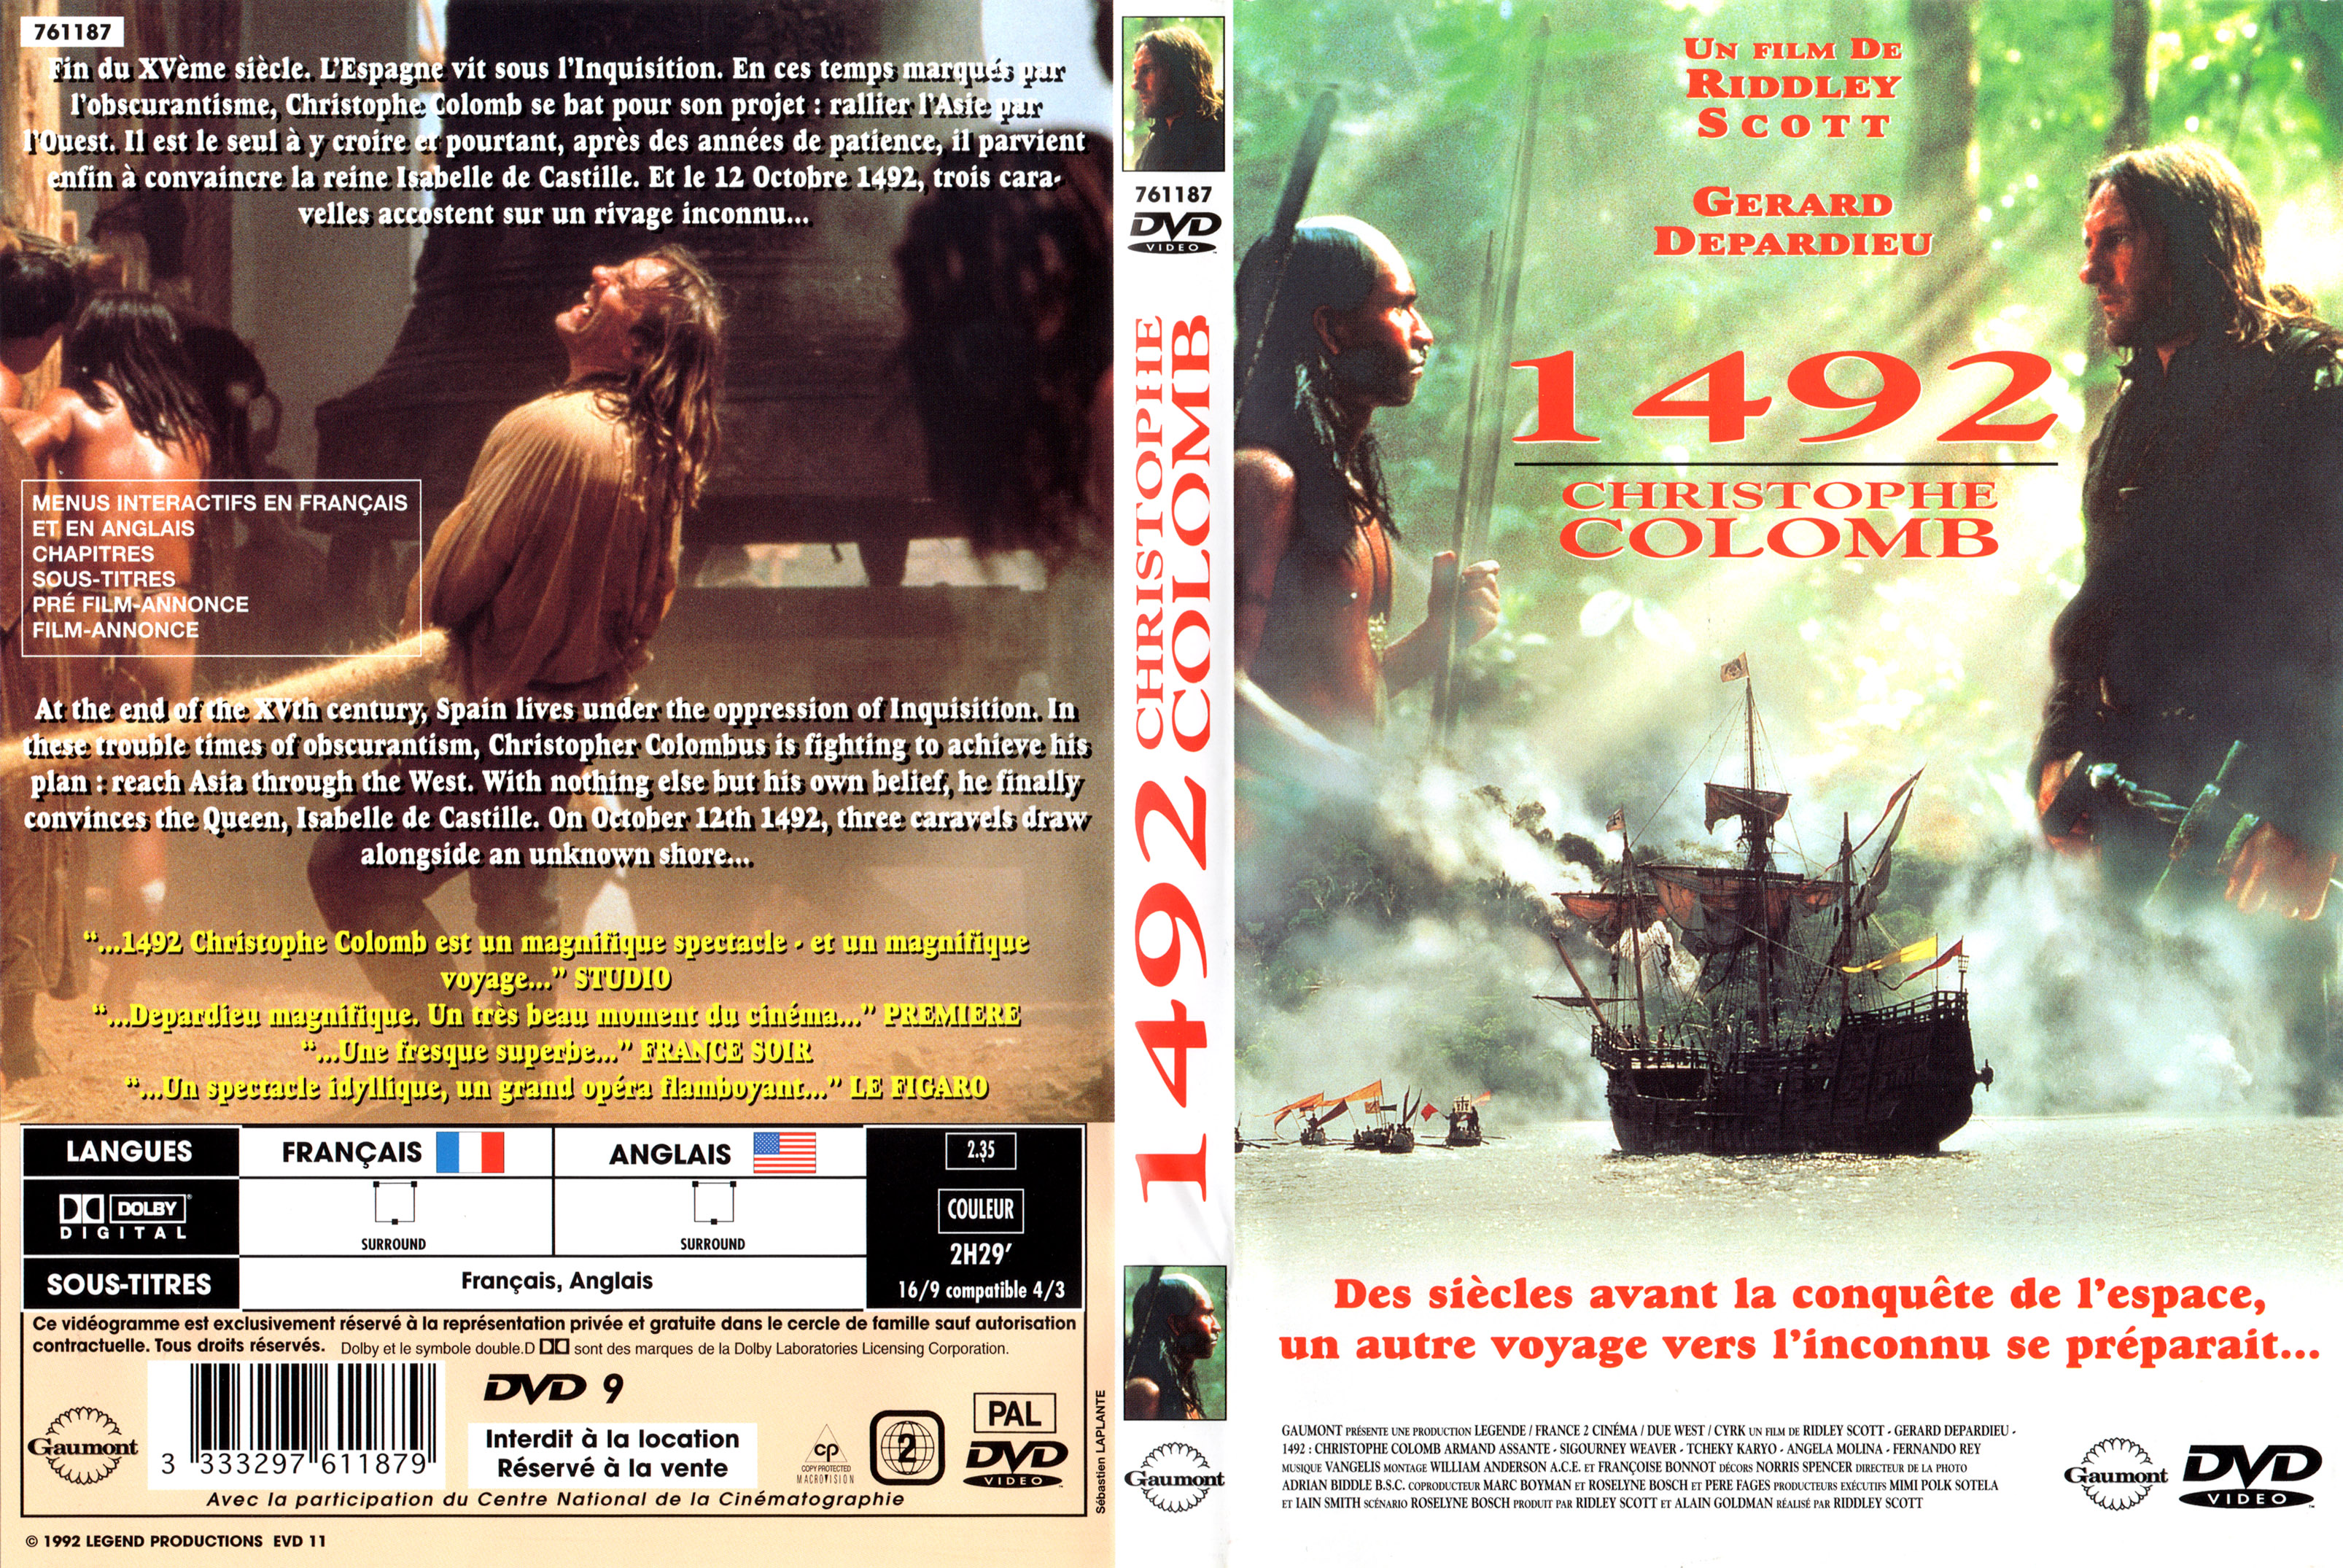 Jaquette DVD 1492 Christophe Colomb v2